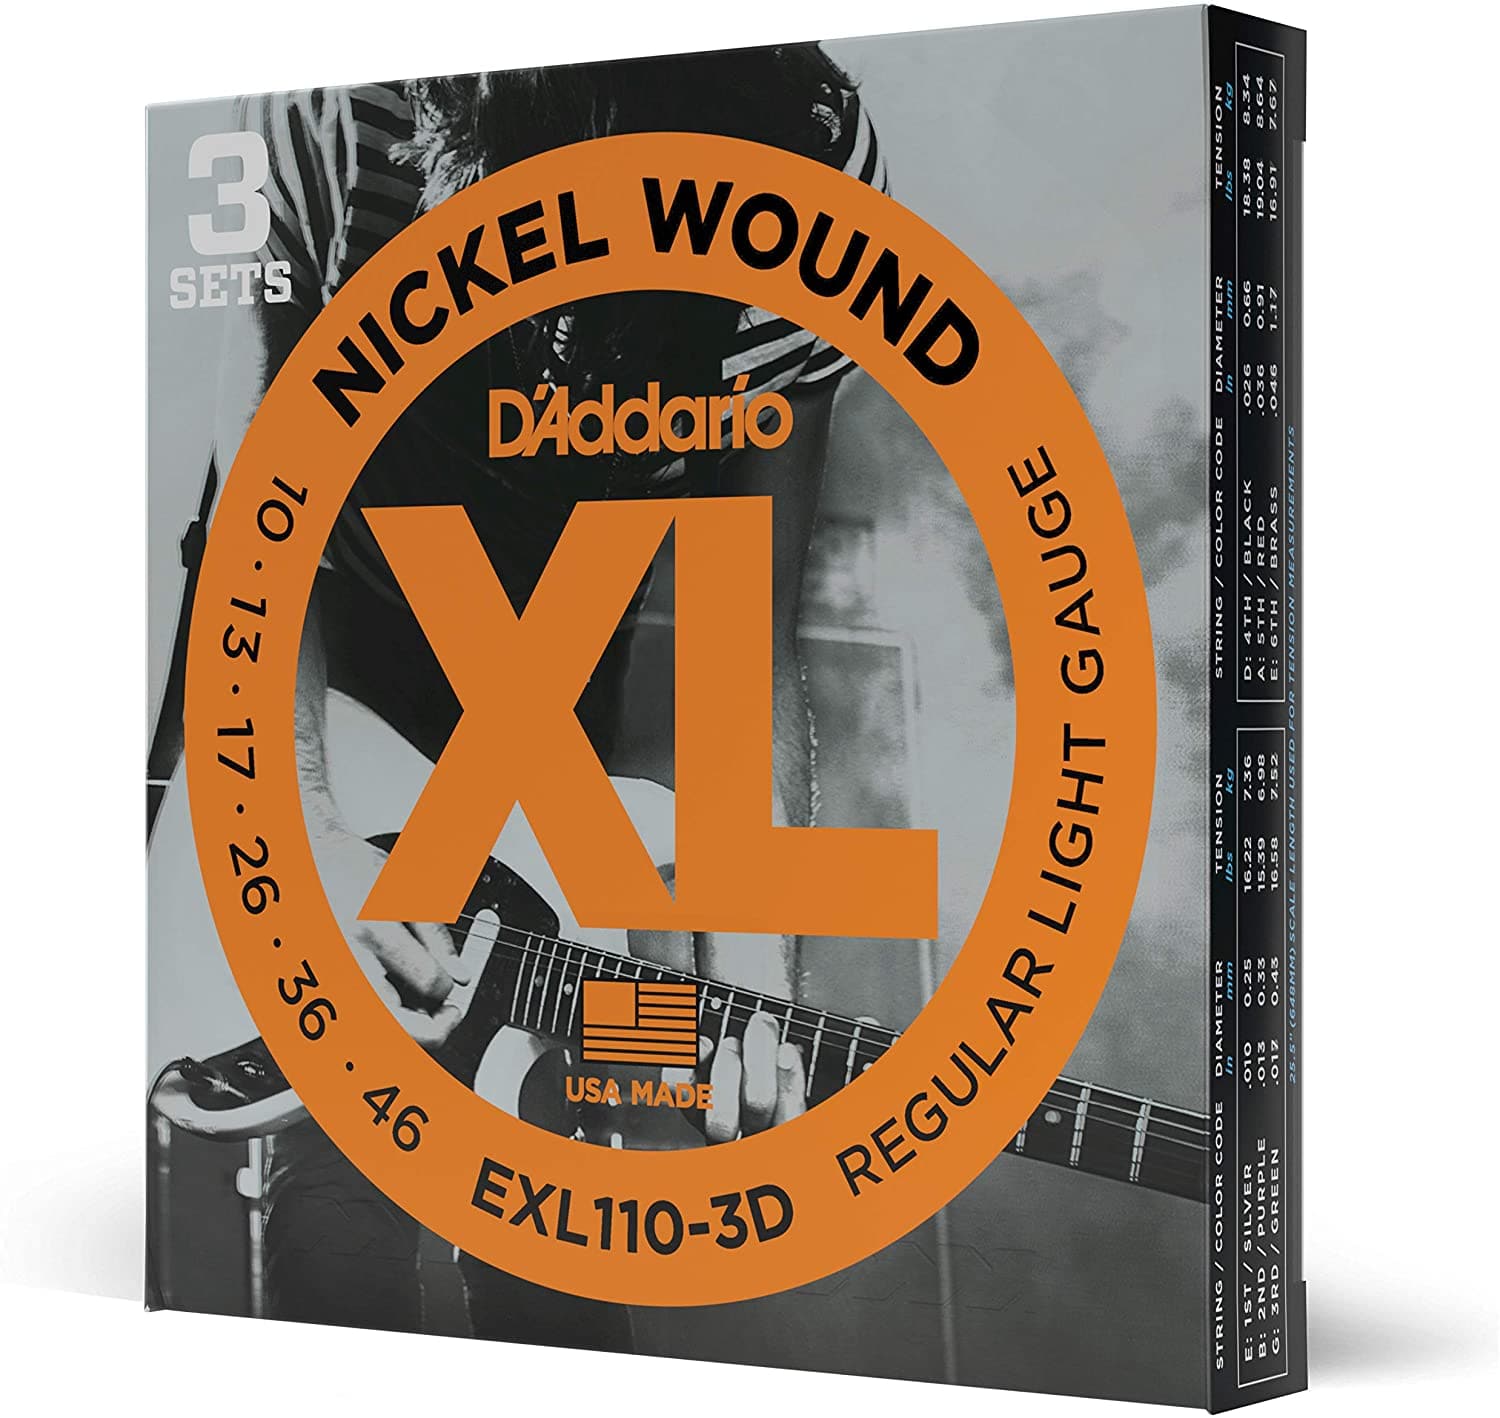 D'Addario EXL110-3D XL Electric Guitar Strings - Regular Light - 10-46 - 3 Pack